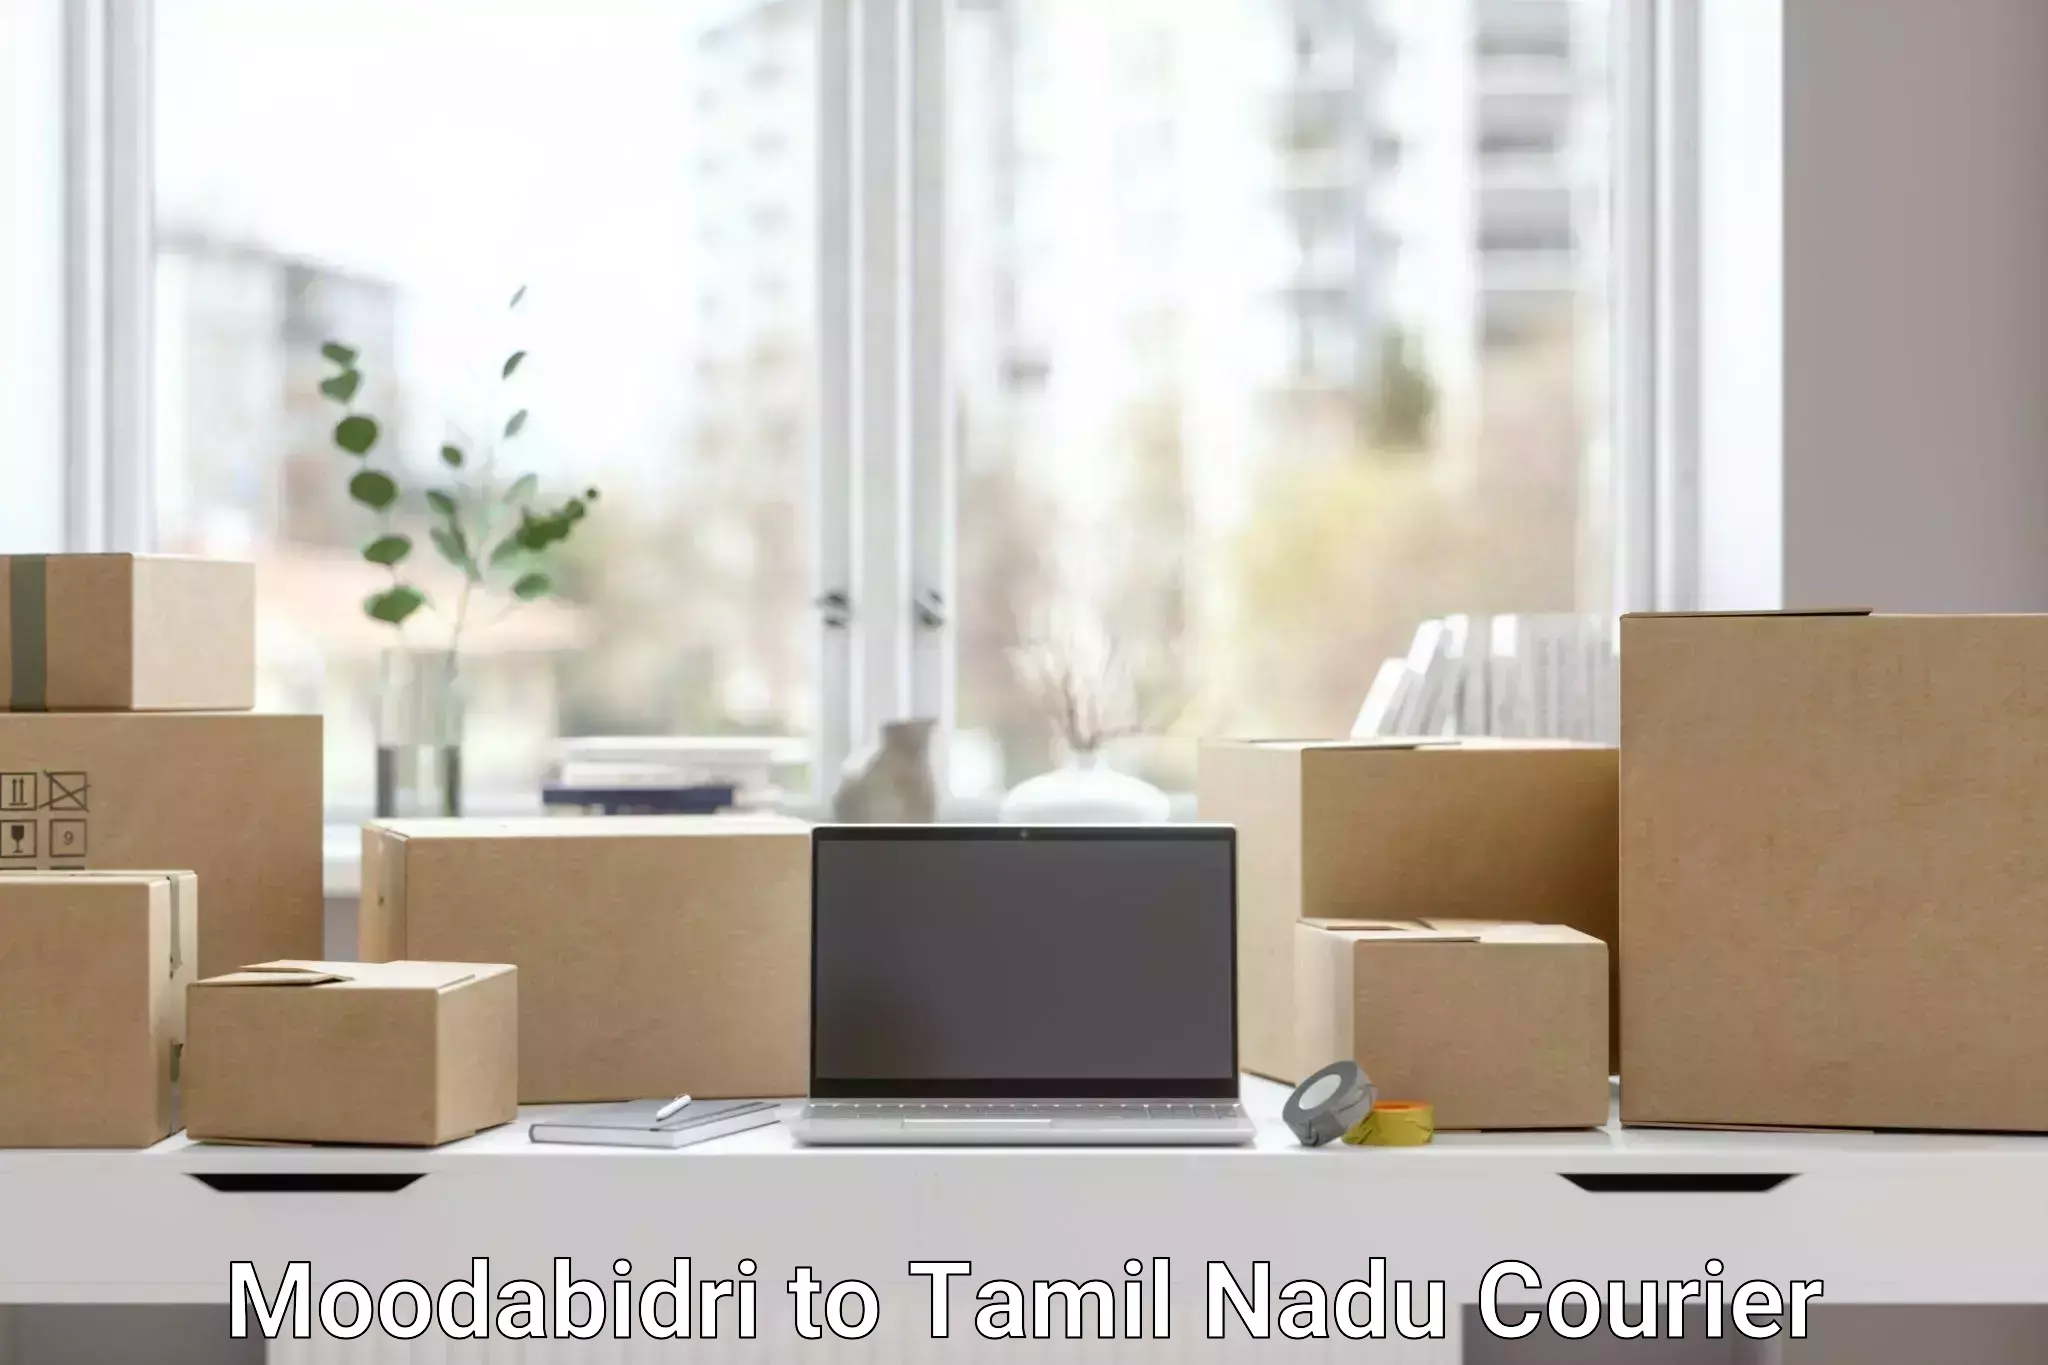 Specialized shipment handling Moodabidri to Chennai